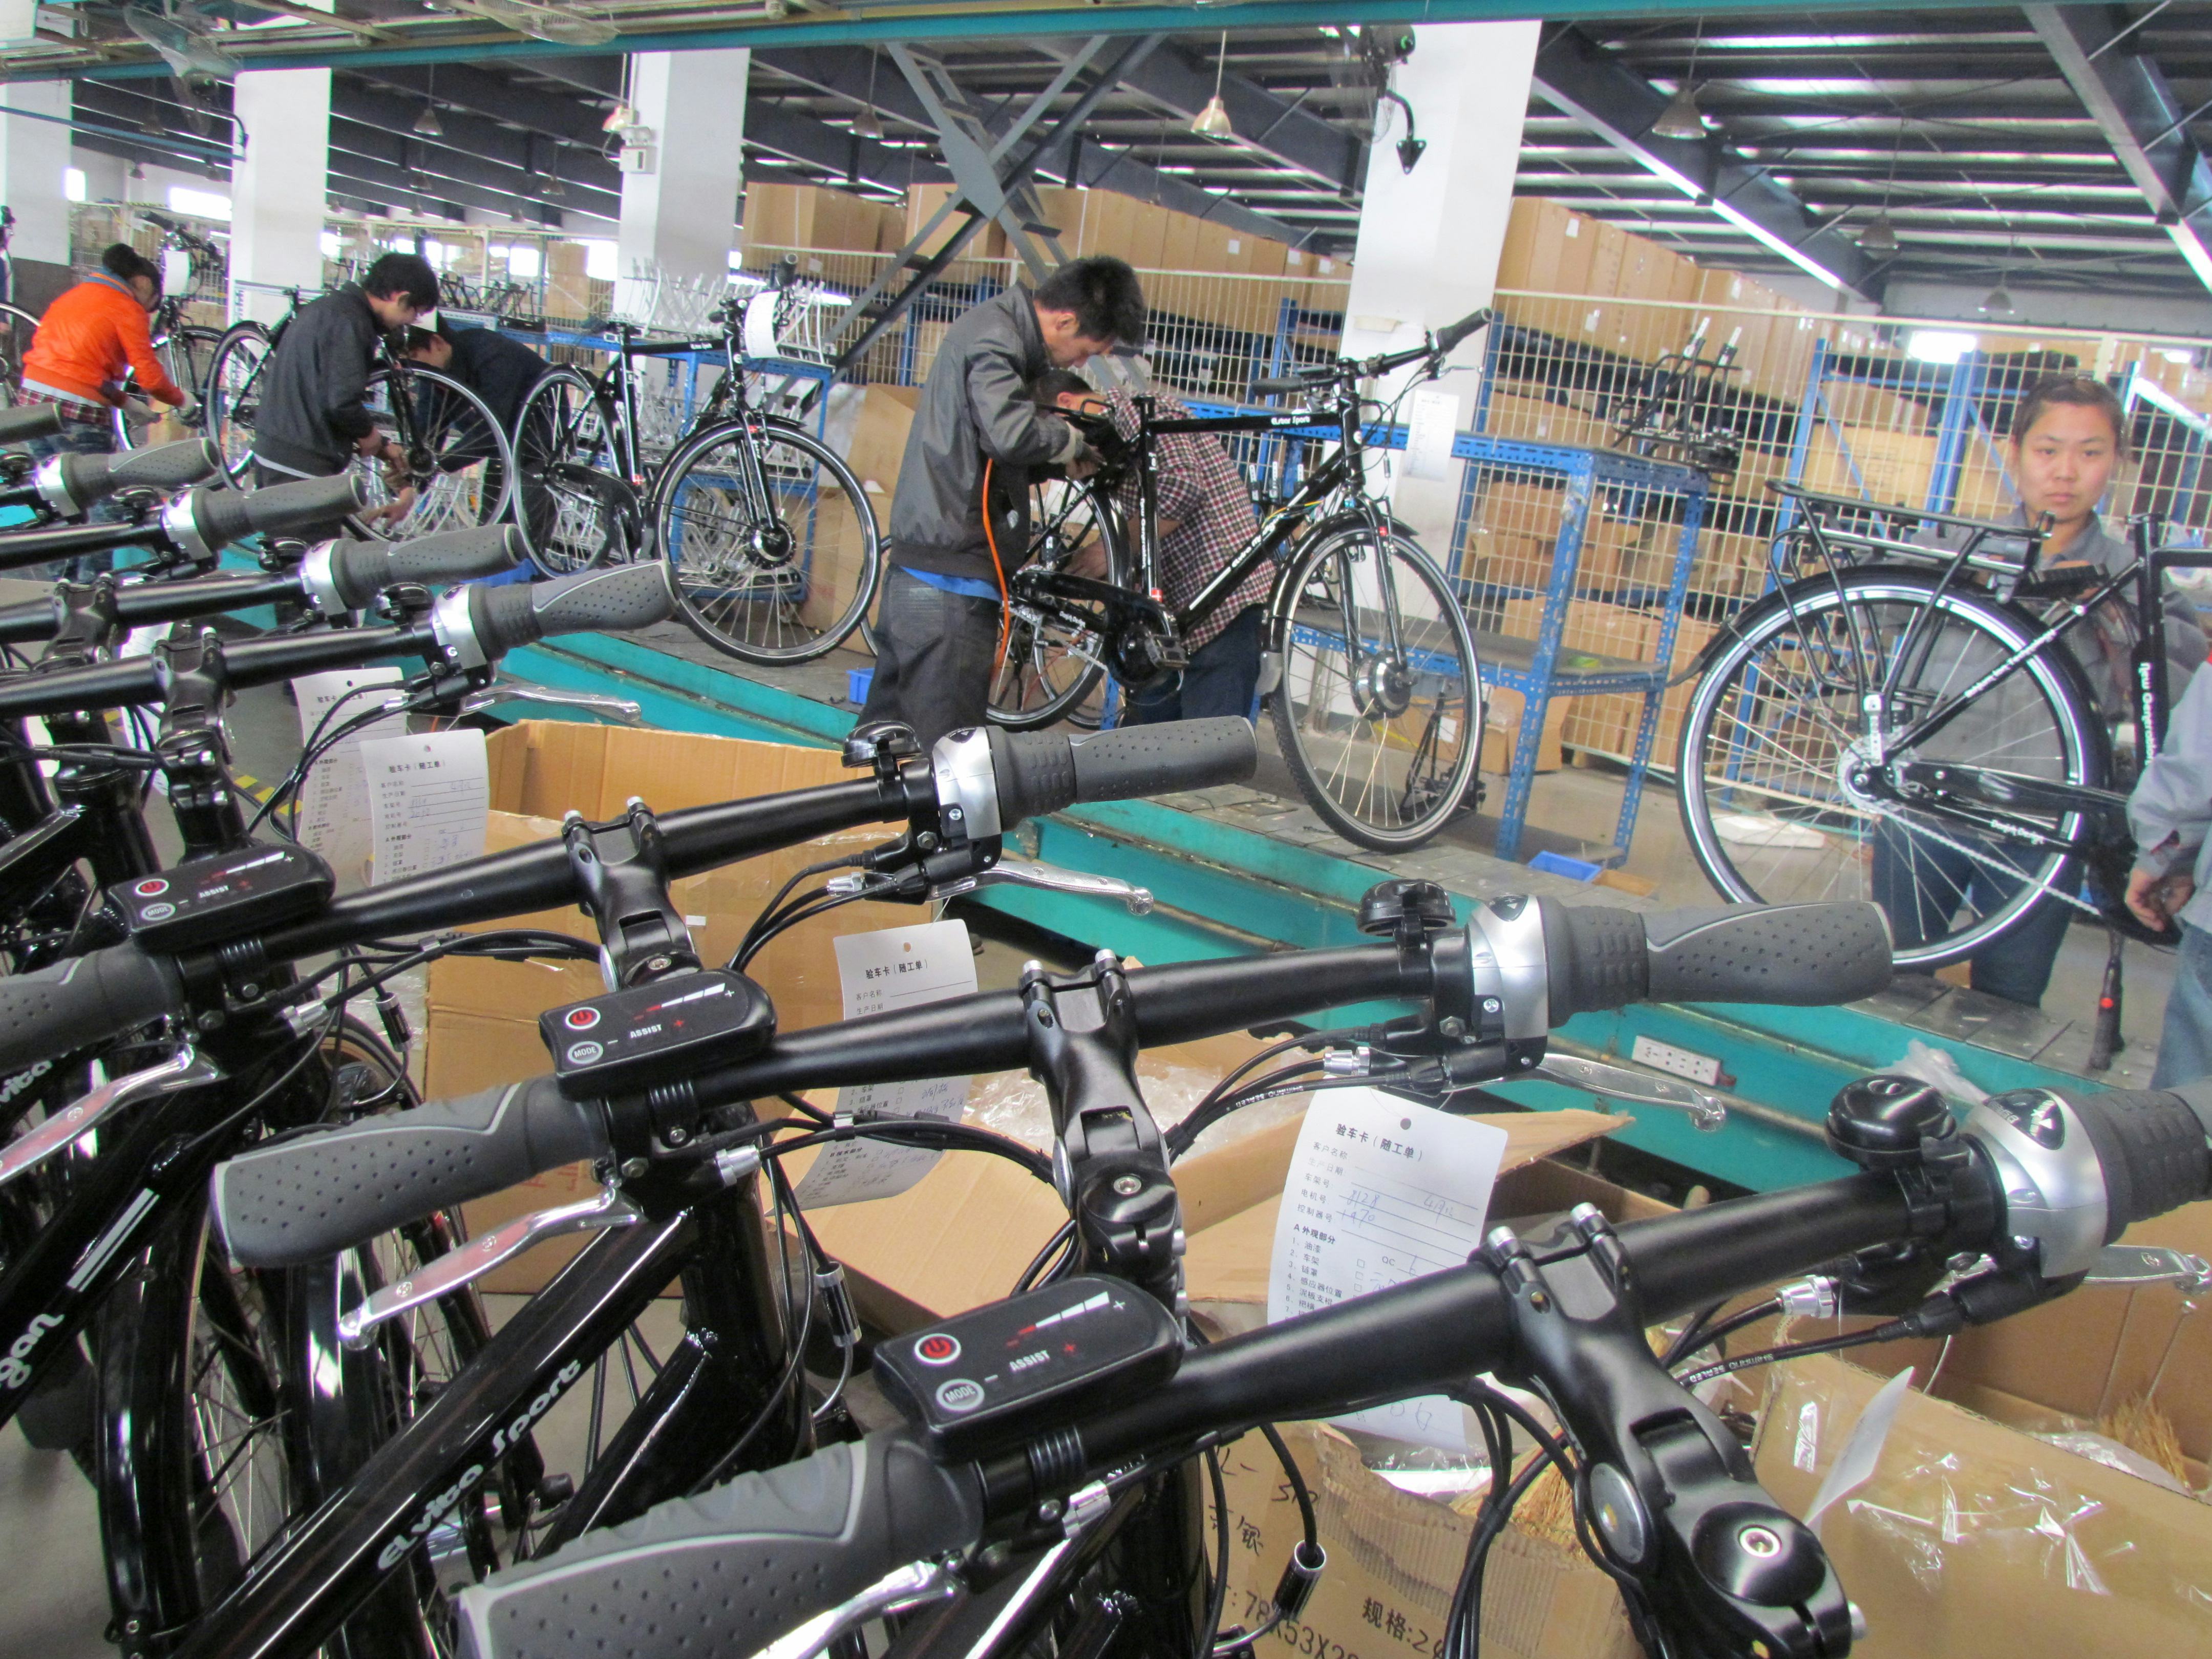 Impact of the combined EU’s anti-dumping and U.S. tariffs will hit Chinese industry hard. – Photo Bike Europe